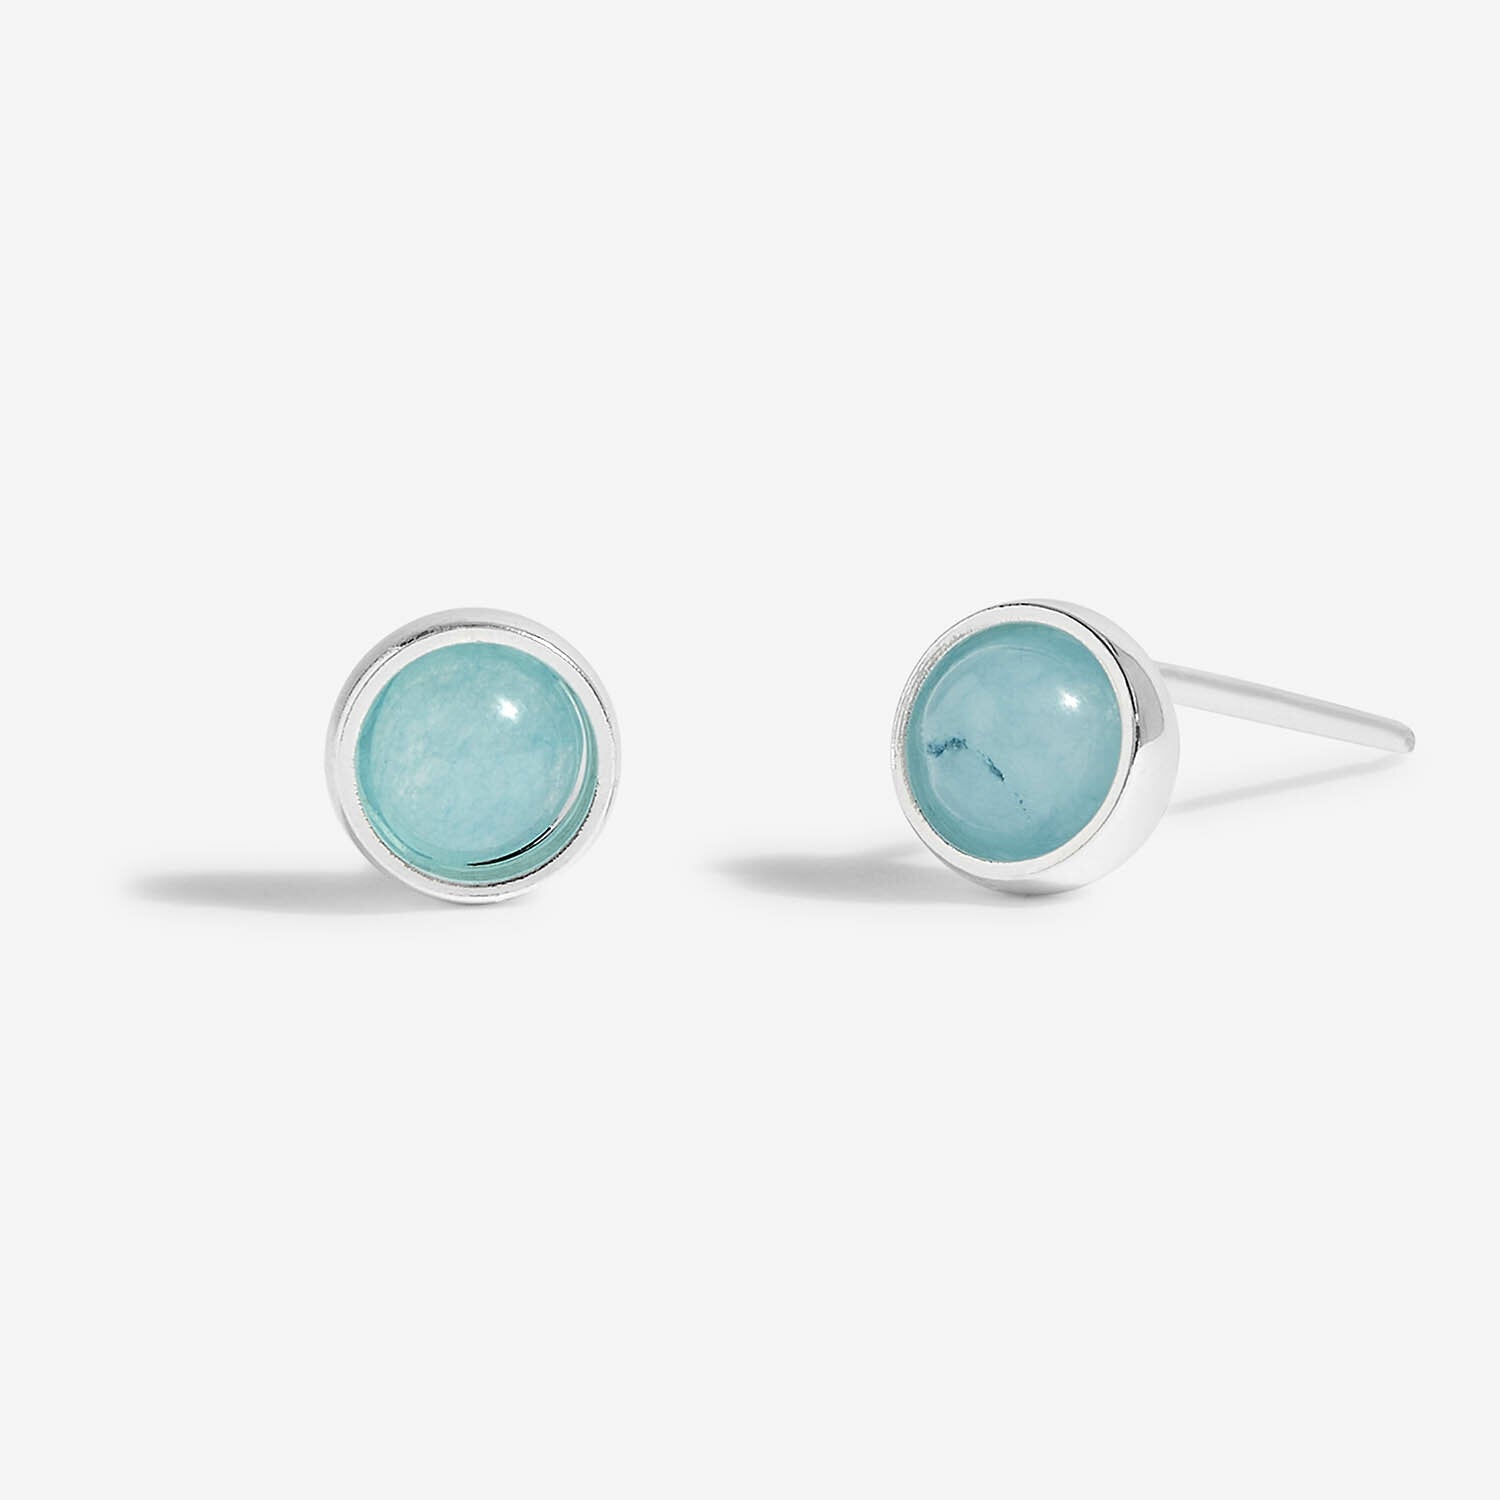 Joma Jewellery - Birthstone Earrings - March - Aqua Crystal